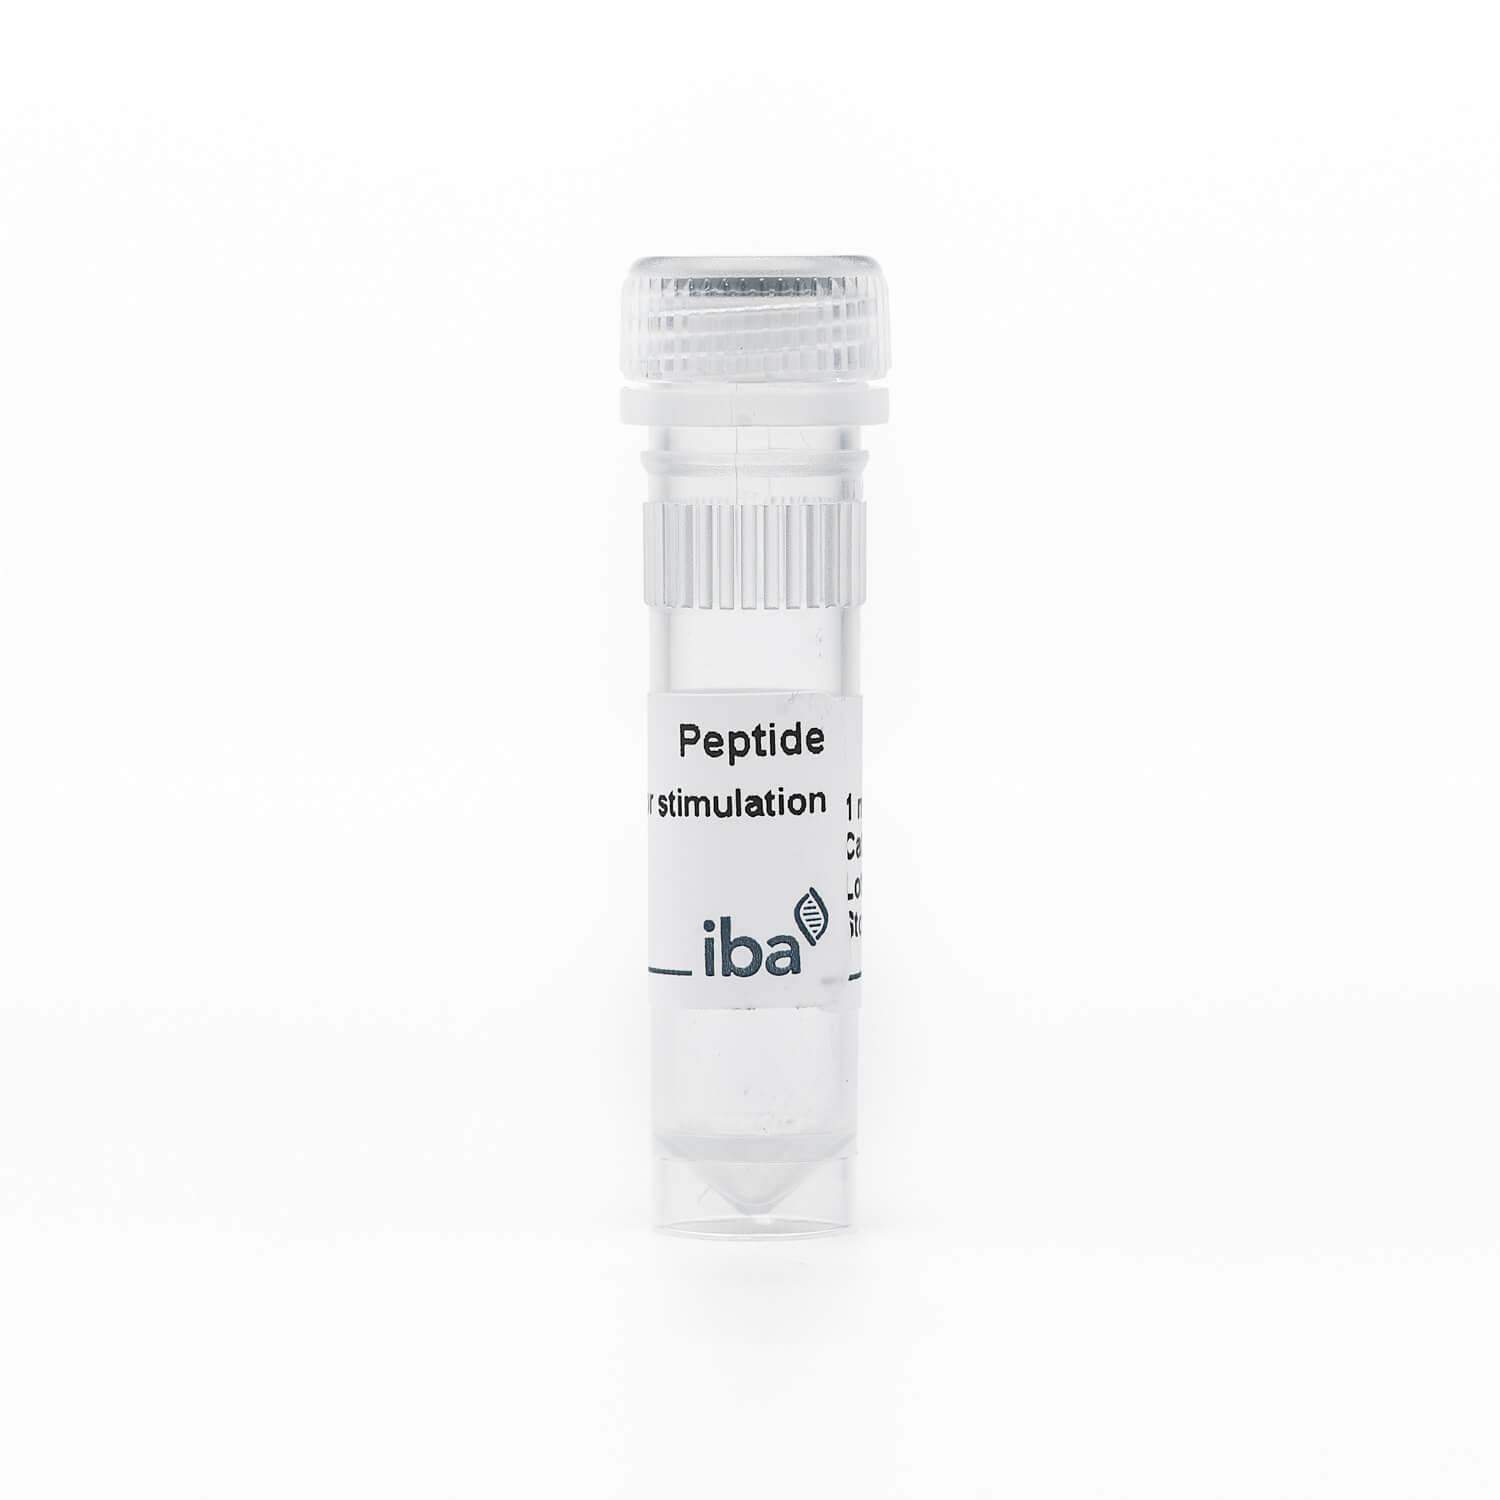 Ovalbumin peptide SIINFEKL (H-2 Kb)